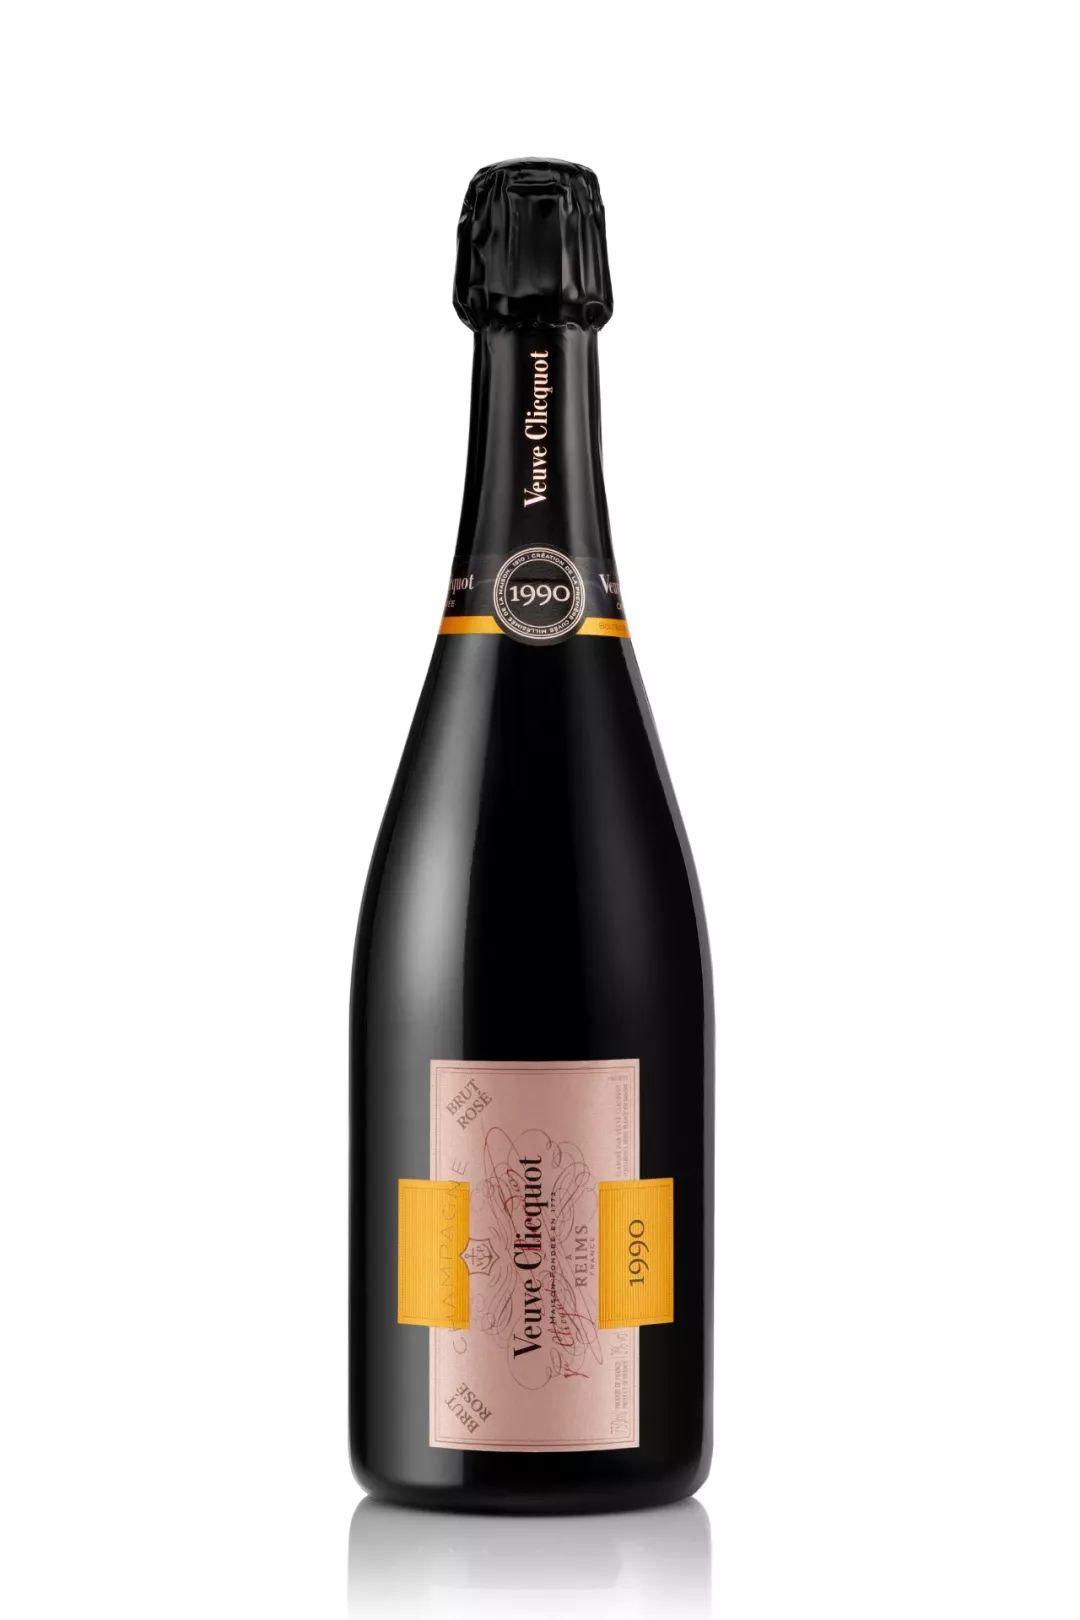 2019 展商介绍 | 凯歌香槟 Champagne Veuve Clicquot